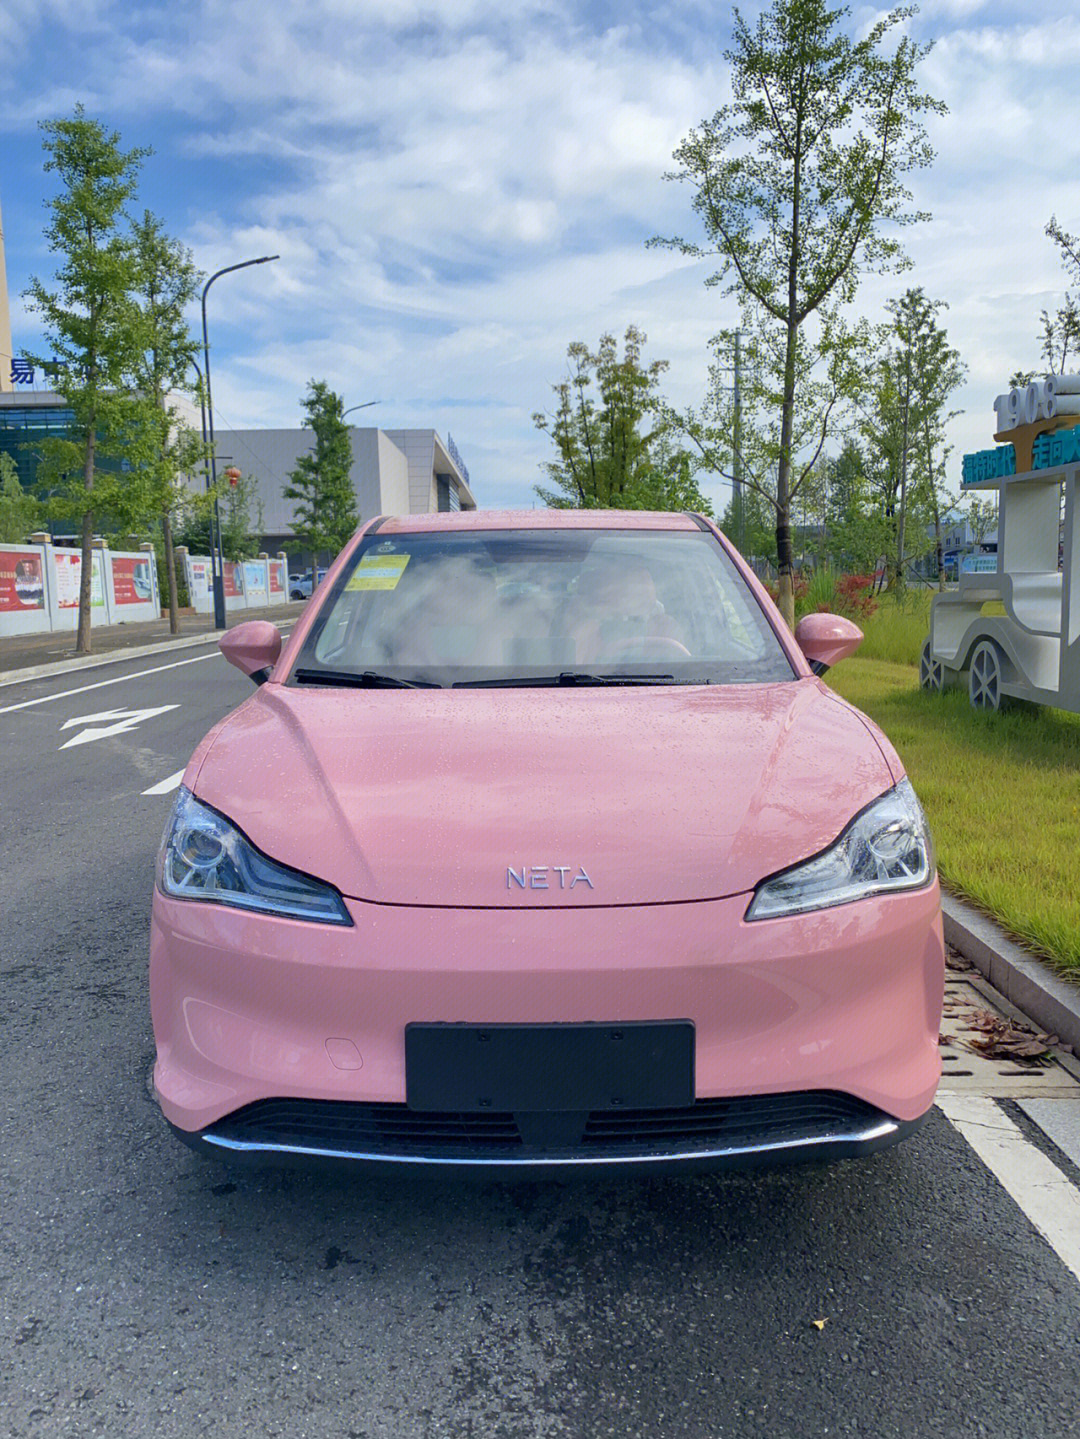 neta汽车粉色图片